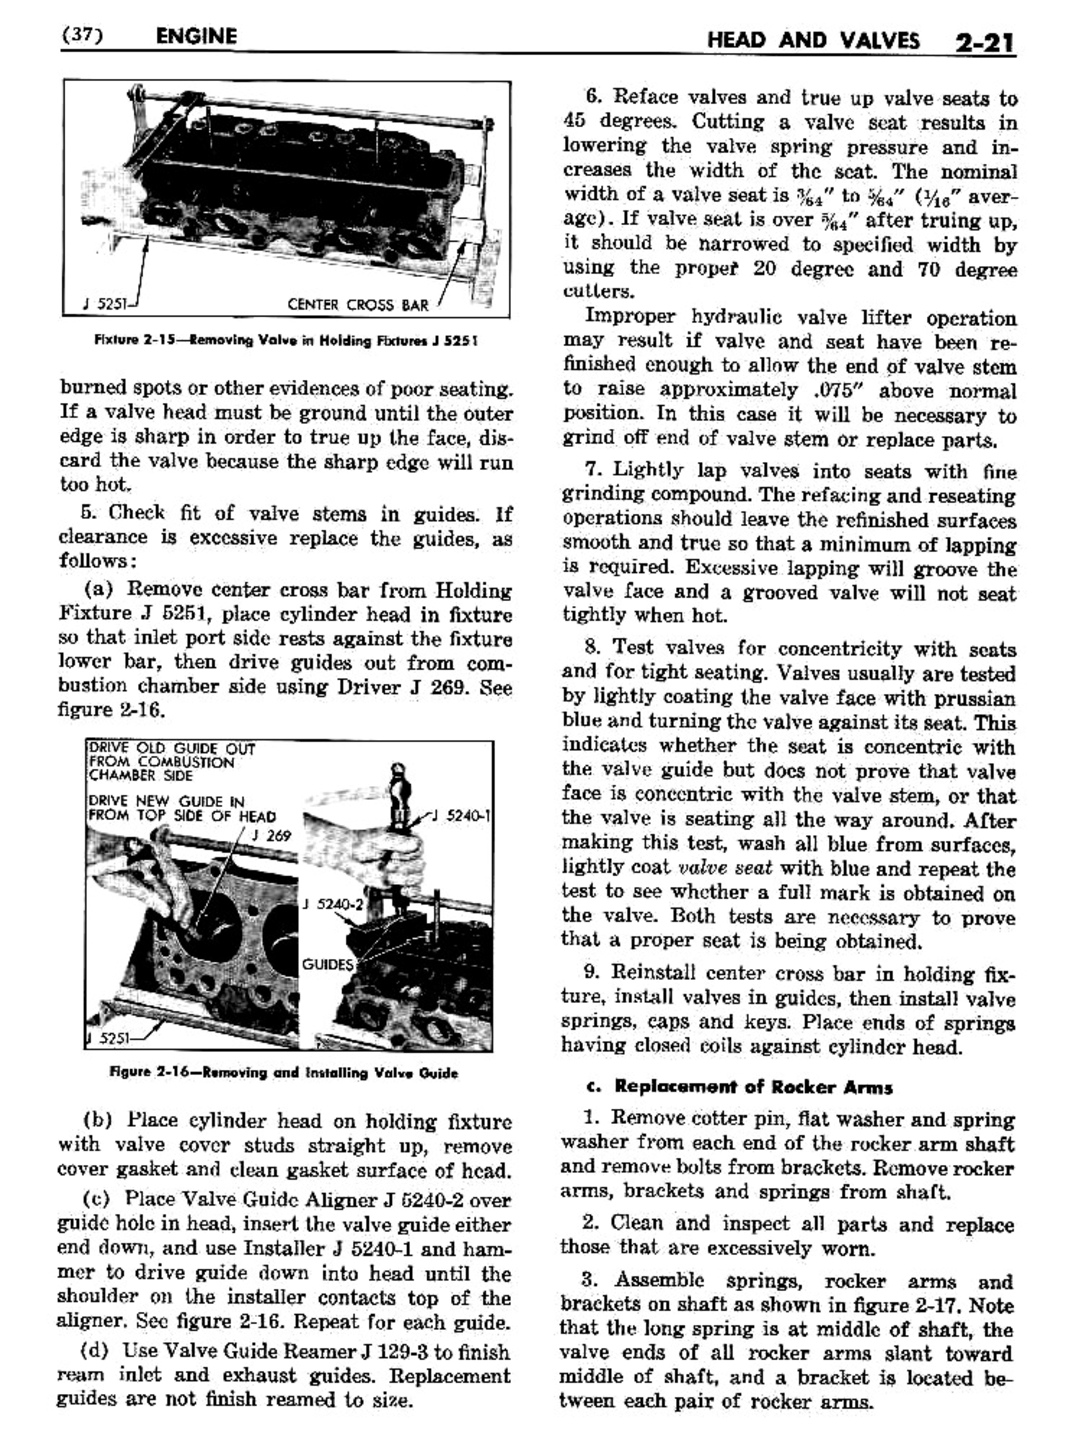 n_03 1956 Buick Shop Manual - Engine-021-021.jpg